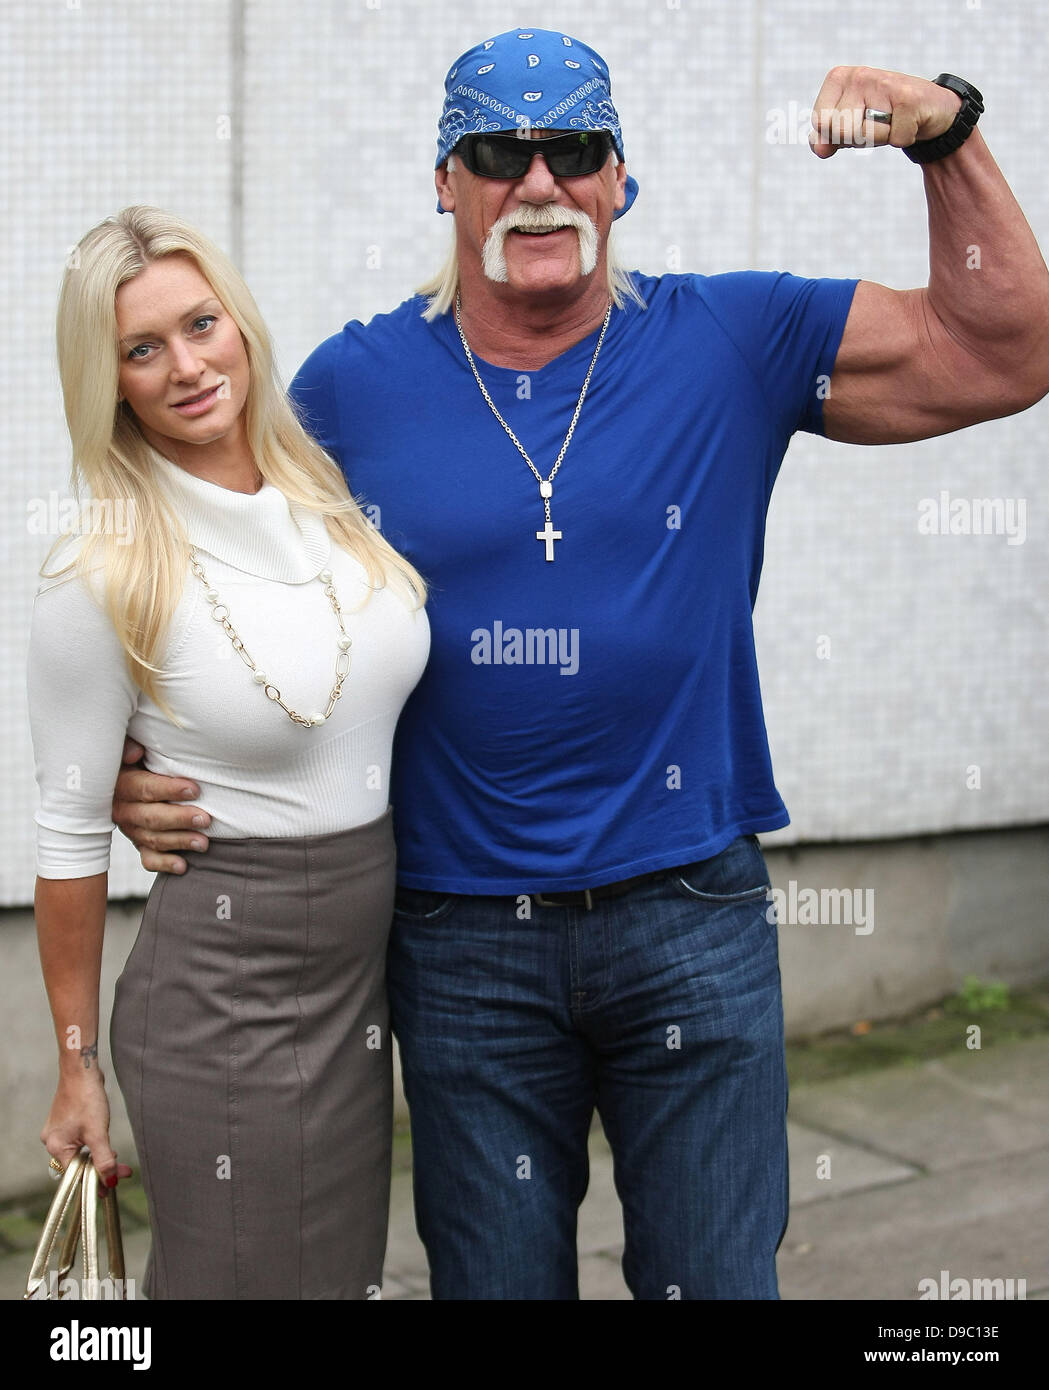 Hulk Hogan and his wife Jennifer McDaniel at the ITV studios London,  England - 25.01.12 Stock Photo - Alamy